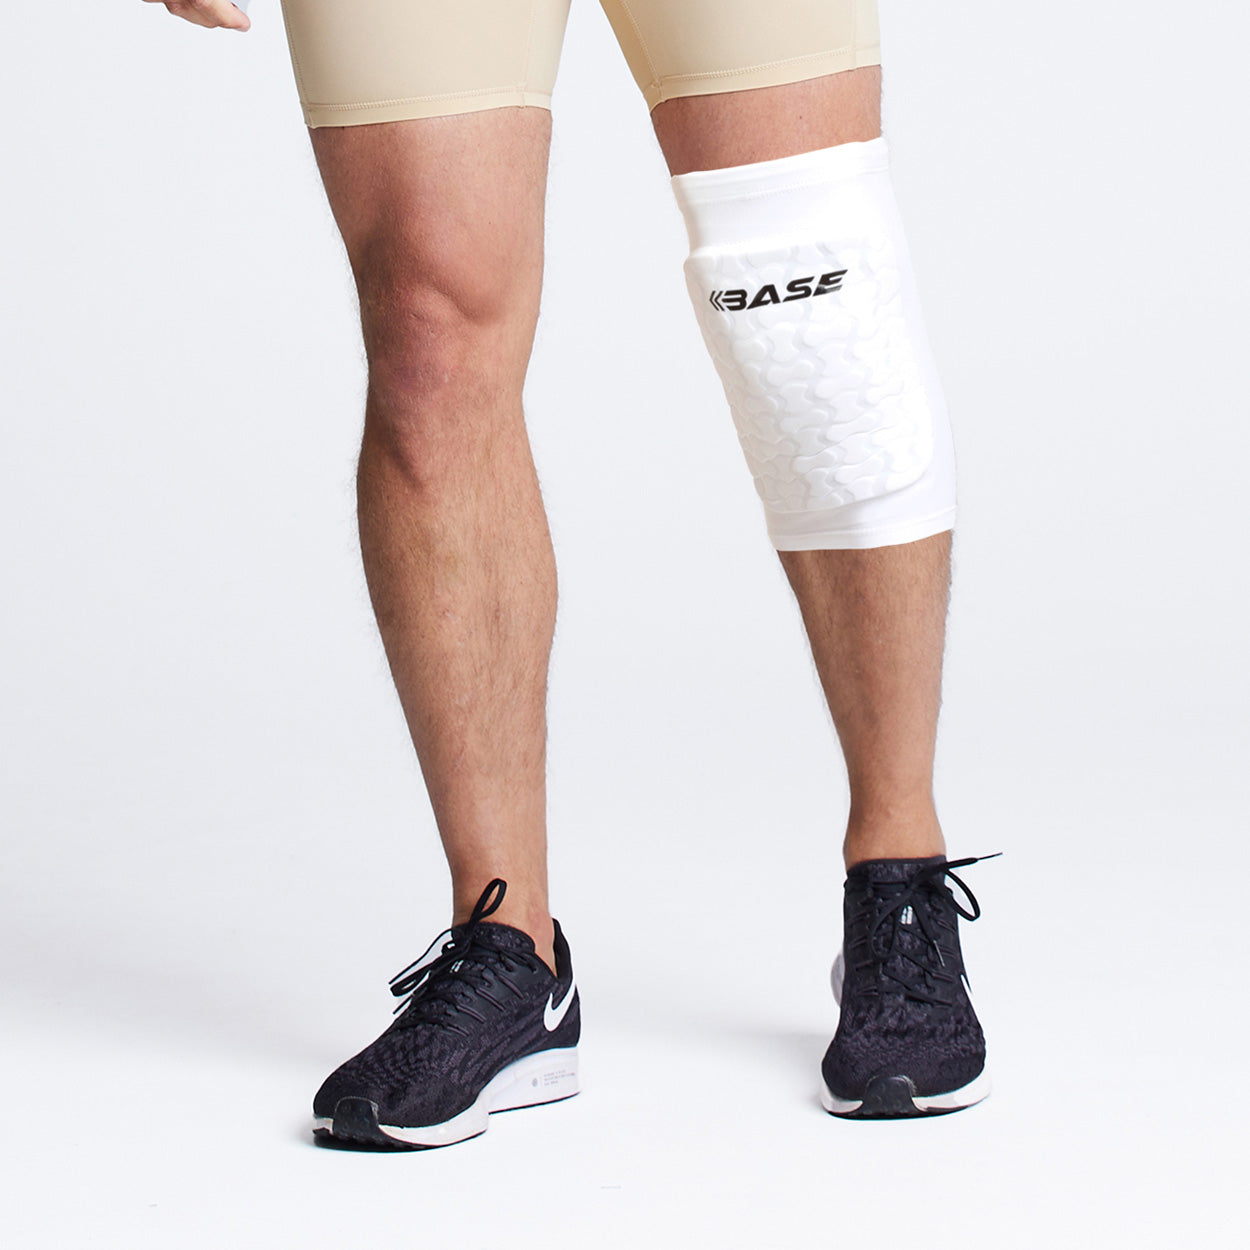 COURT Padded Knee Guard (Pair) - White